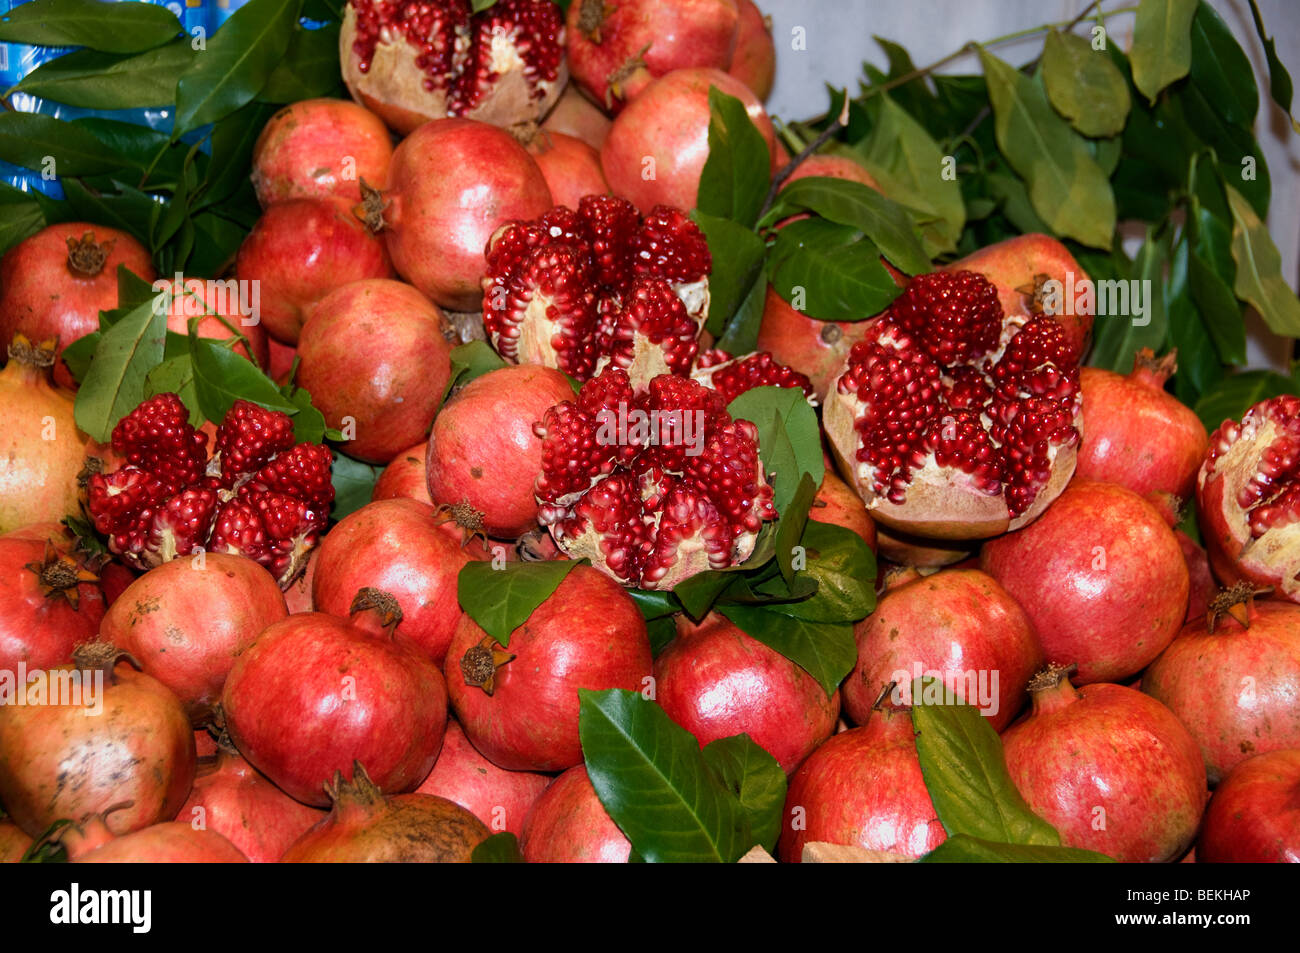 Istanbul Turkey Greengrocer Fruit pomegranate Stock Photo